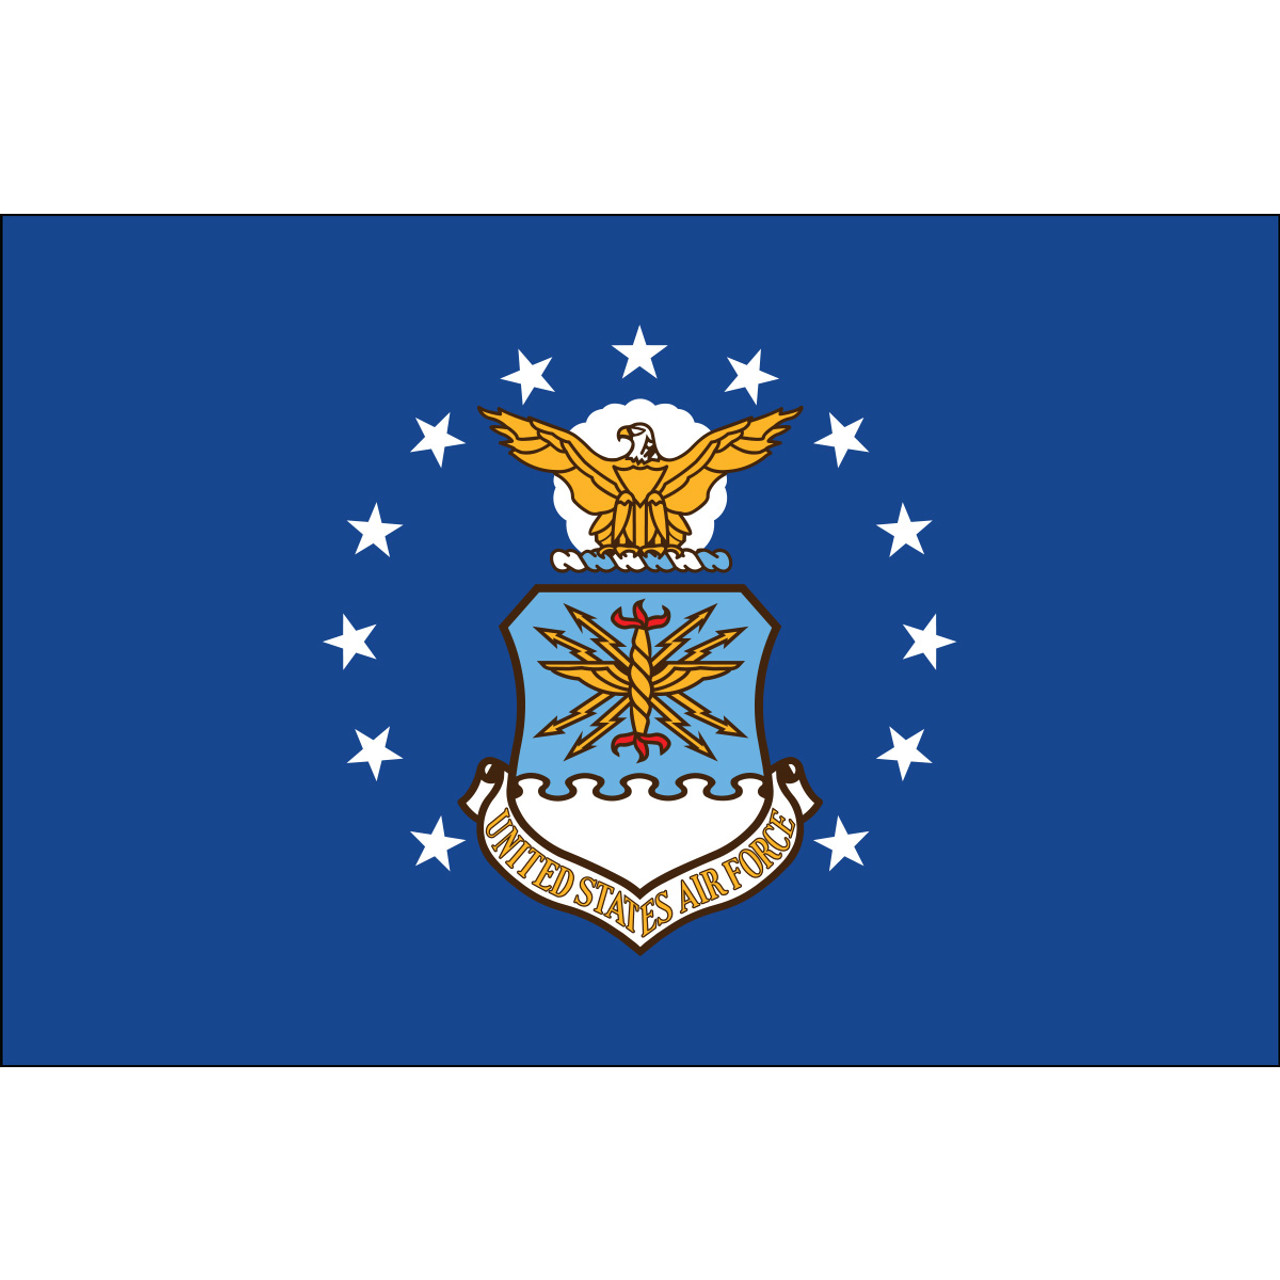 Air Force Emblem Flag 3x5' 